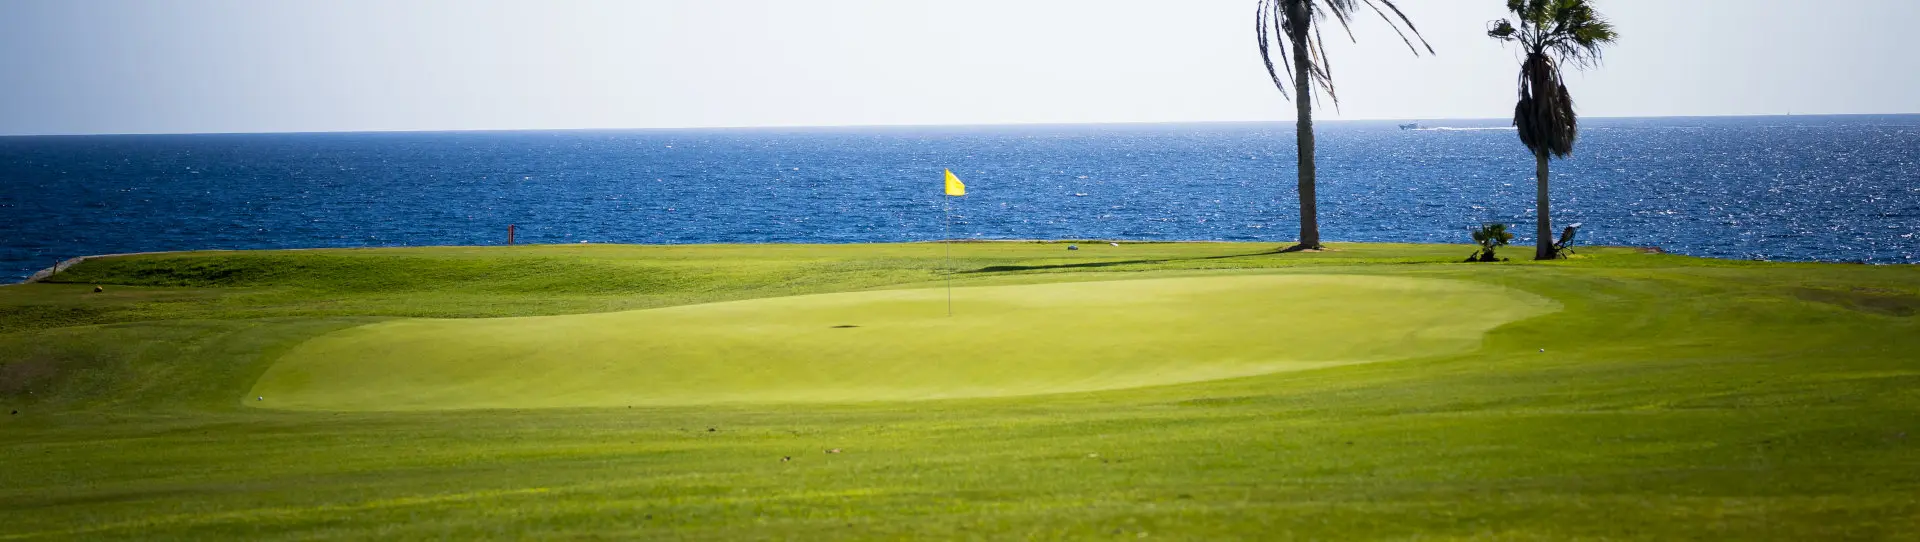 Spain golf courses - Amarilla Golf & Country Club - Photo 1